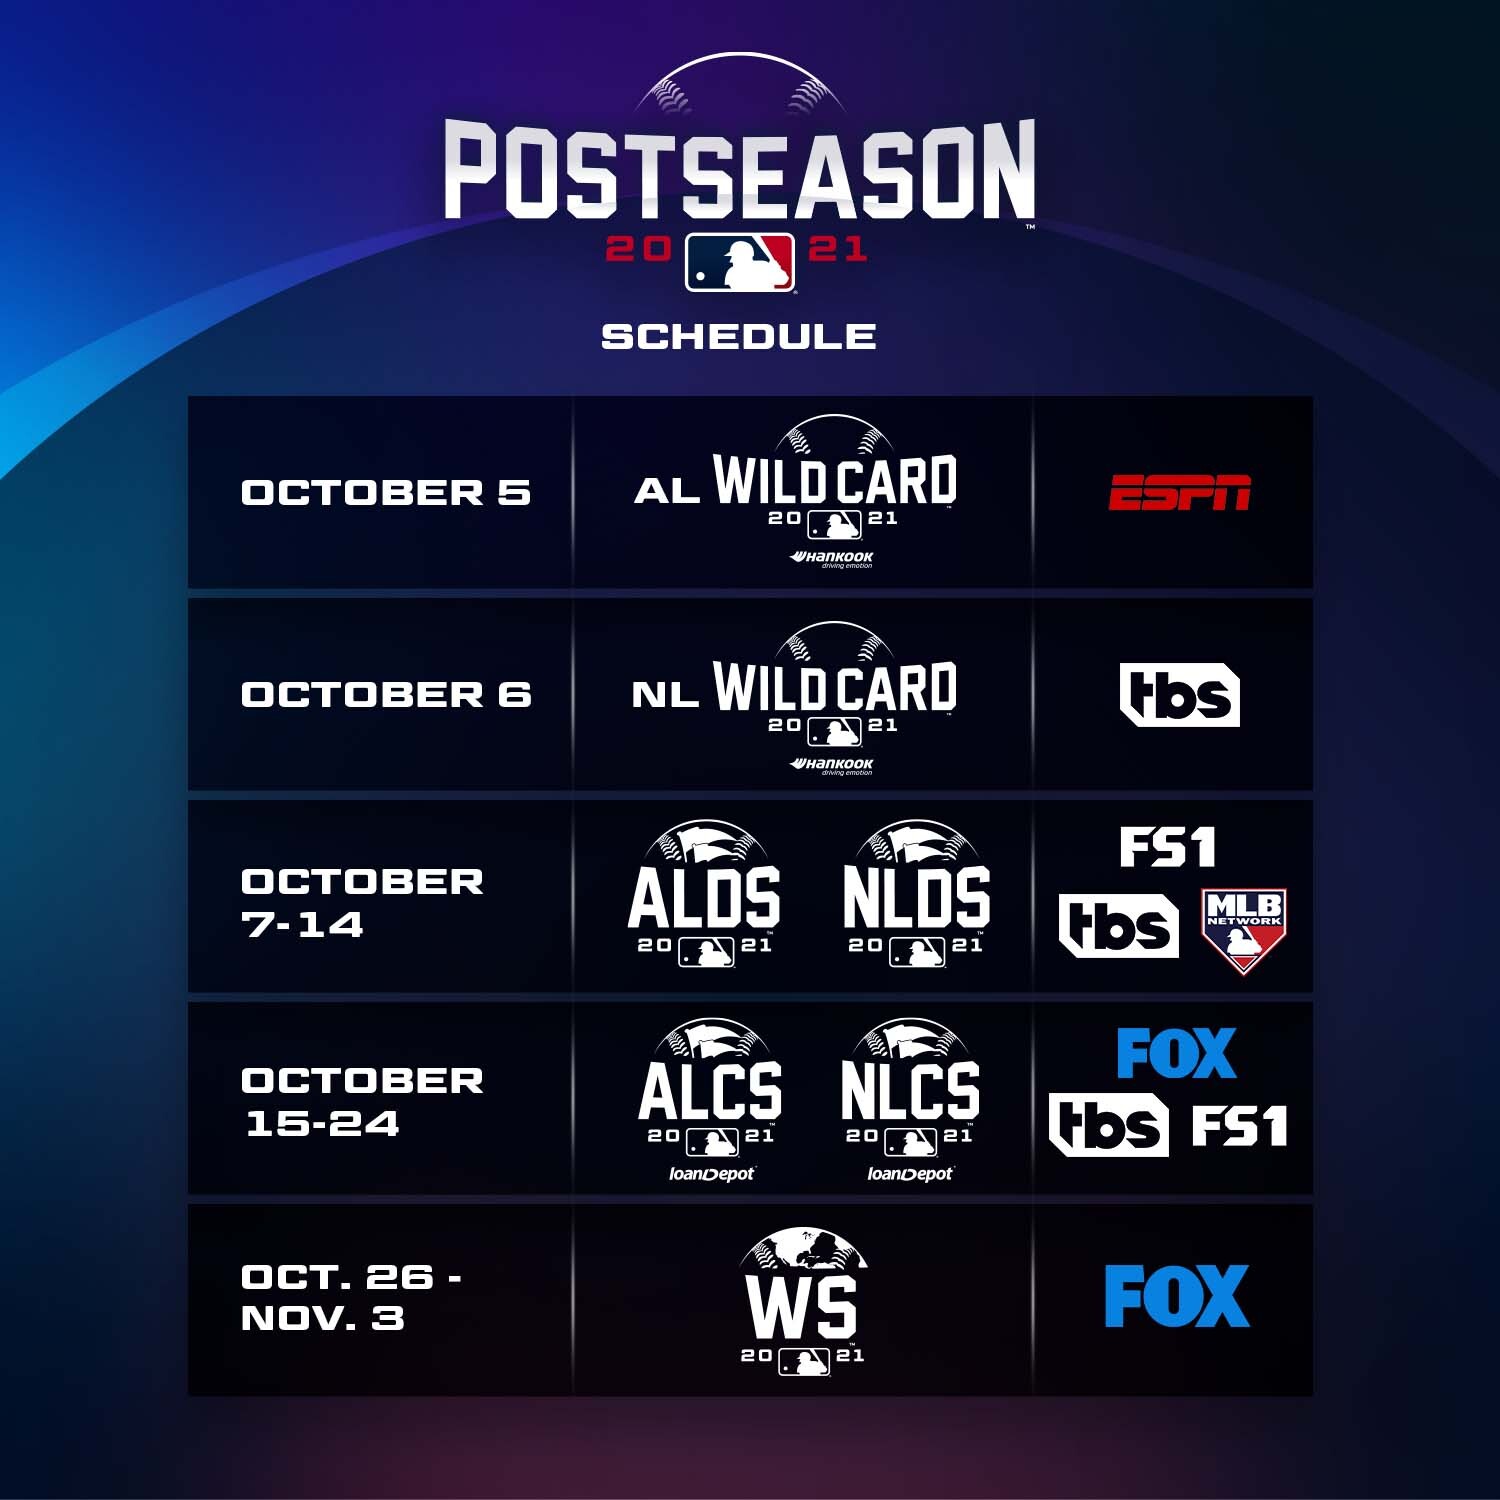 MLB League Championship Series 2022 TV Schedule